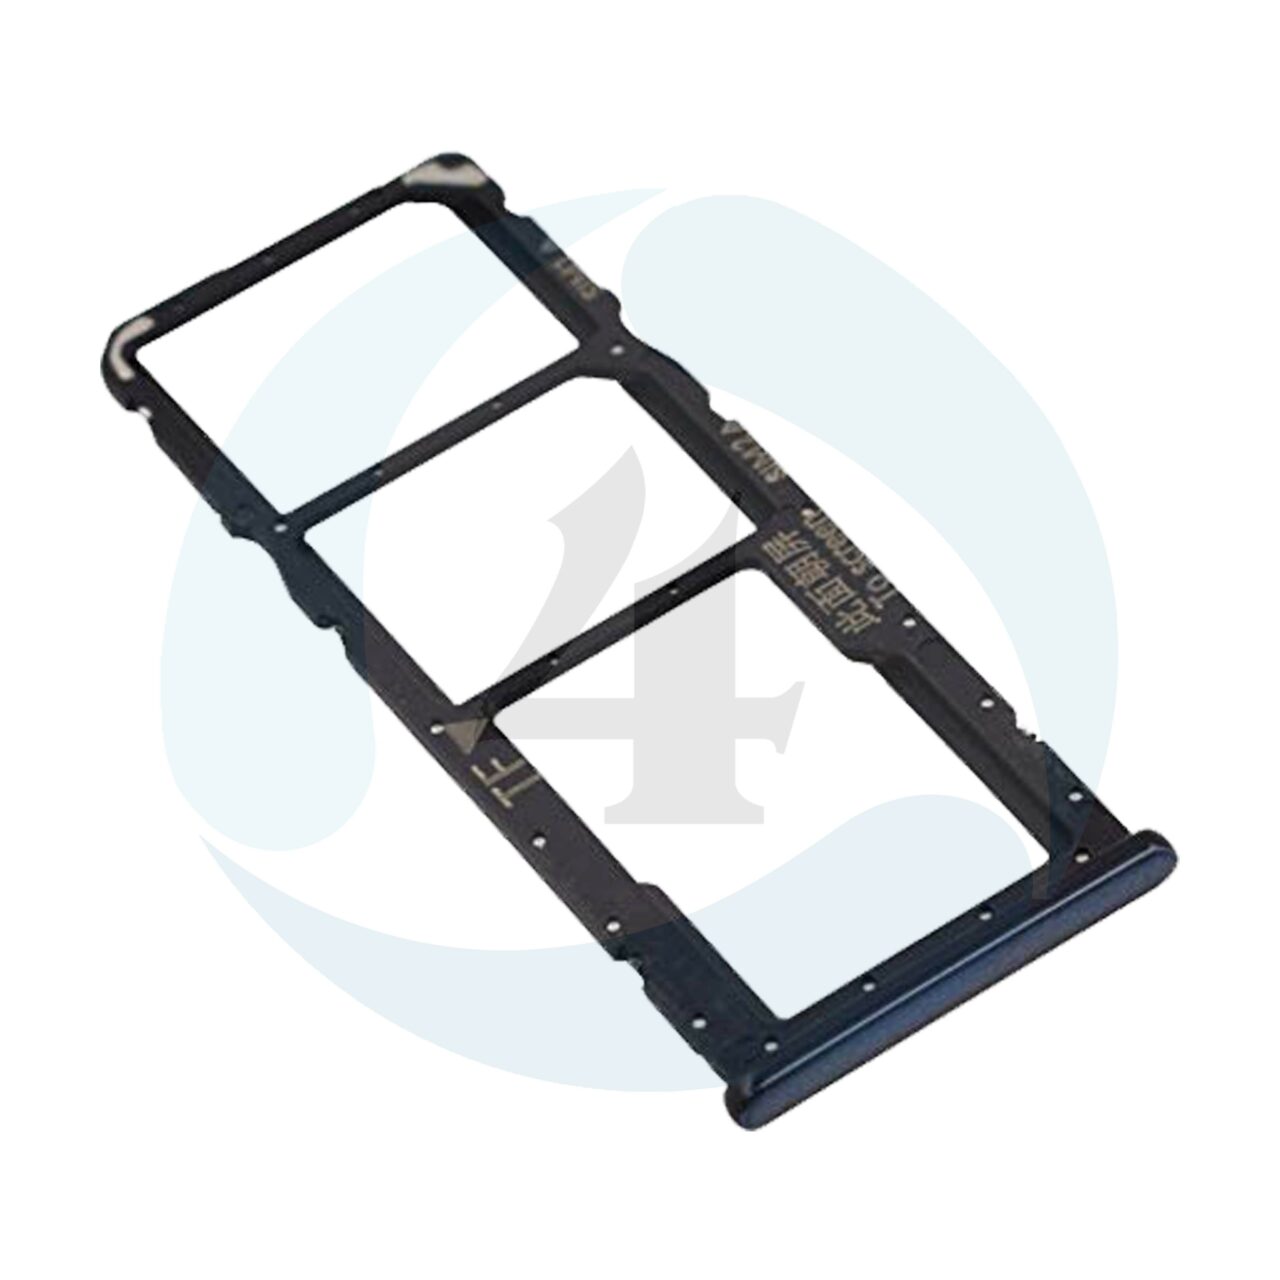 For Huawei Y9 2018 sim tray black